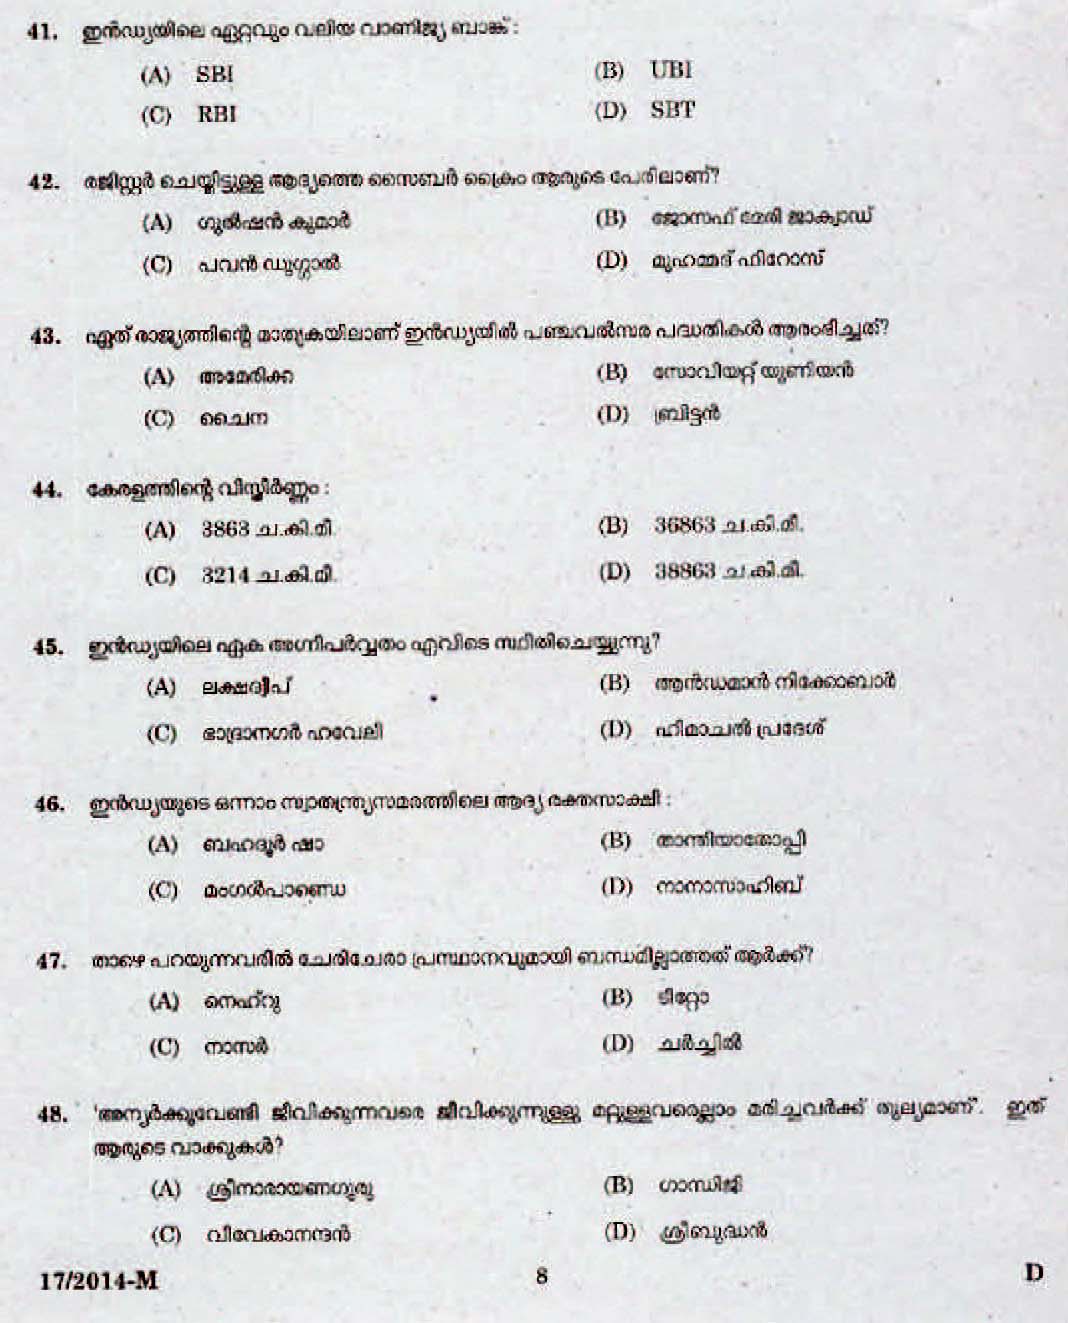 LD Clerk Palakkad Question Paper Malayalam 2014 Paper Code 172014 M 6